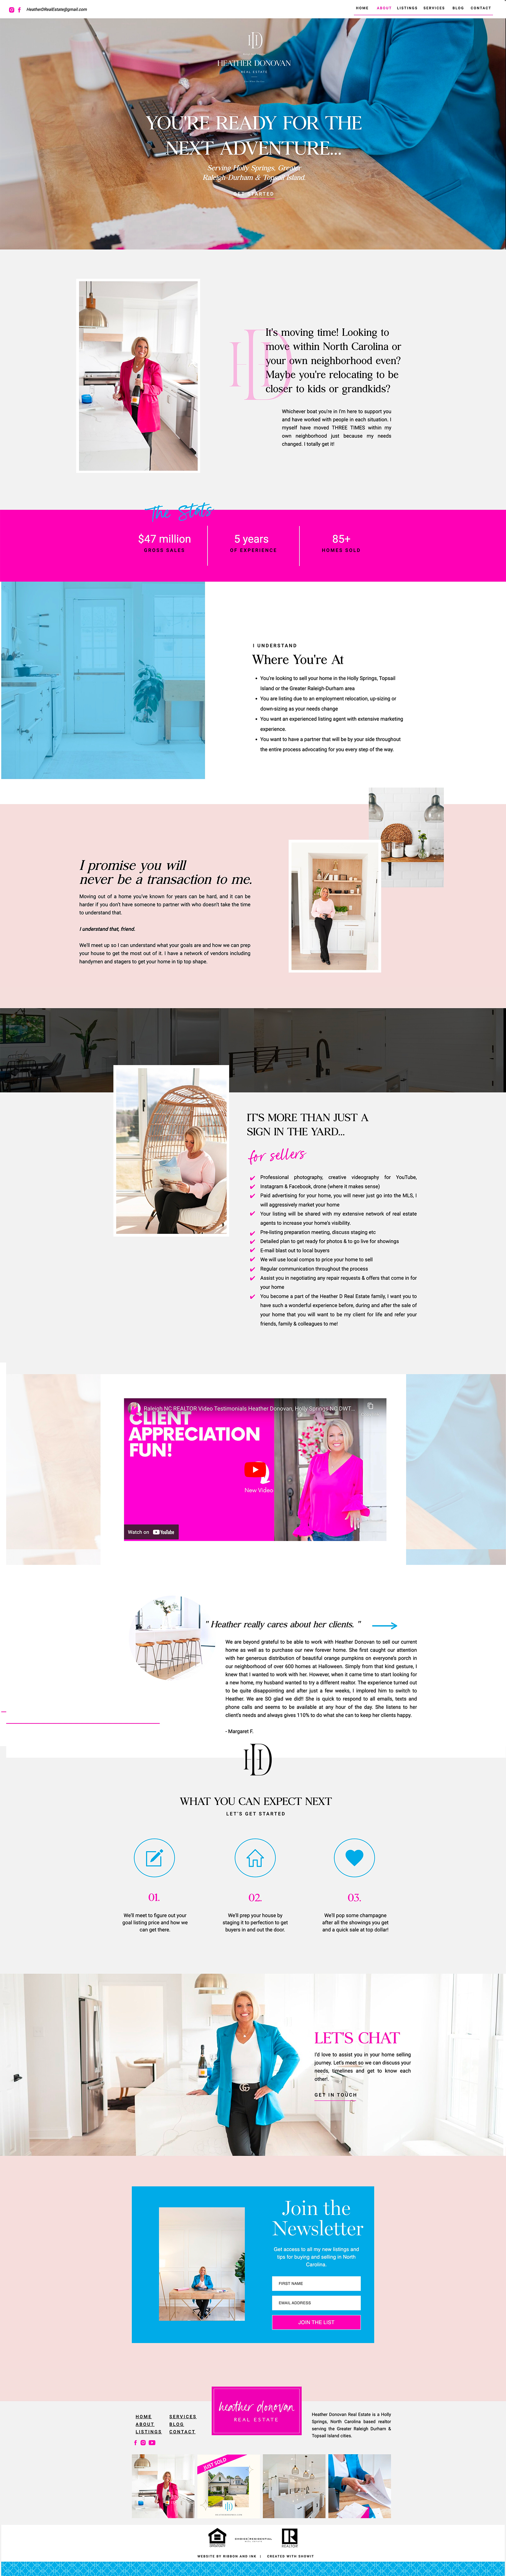 custom showit website for realtors, real estate. women business owners